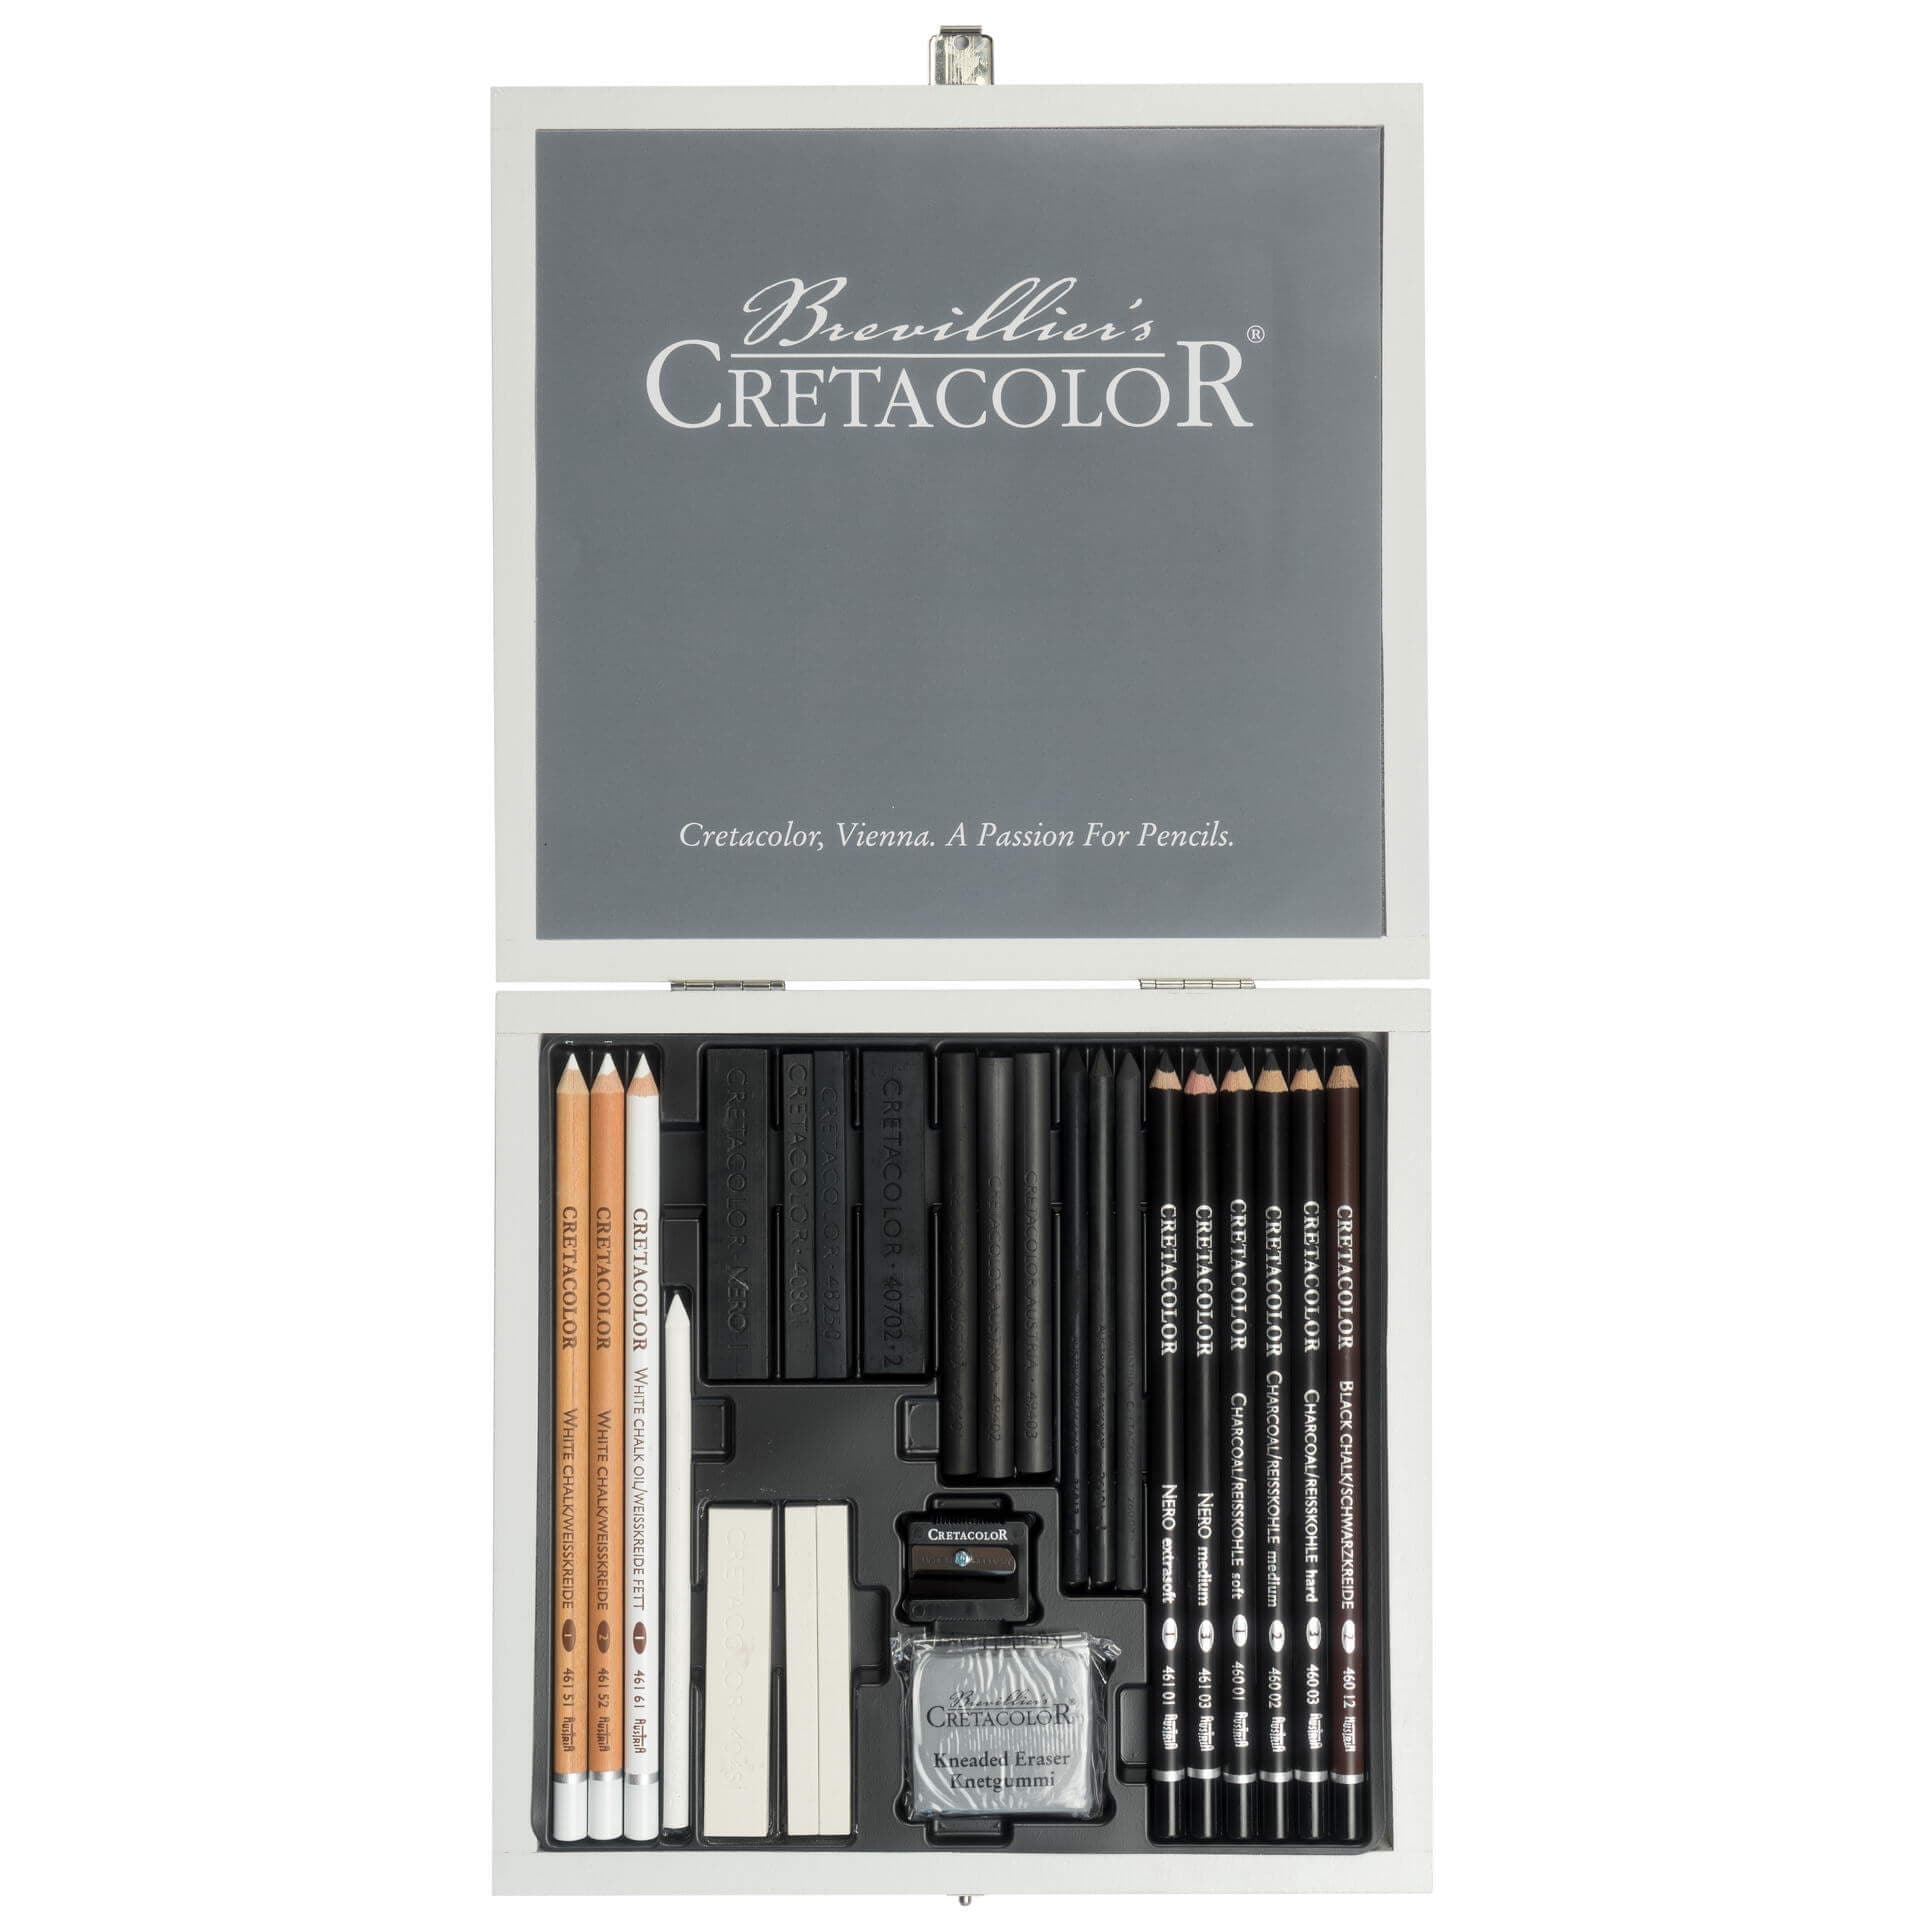 Cretacolor - Sydney Opera House Black Box Charcoal Drawing Set Of 20